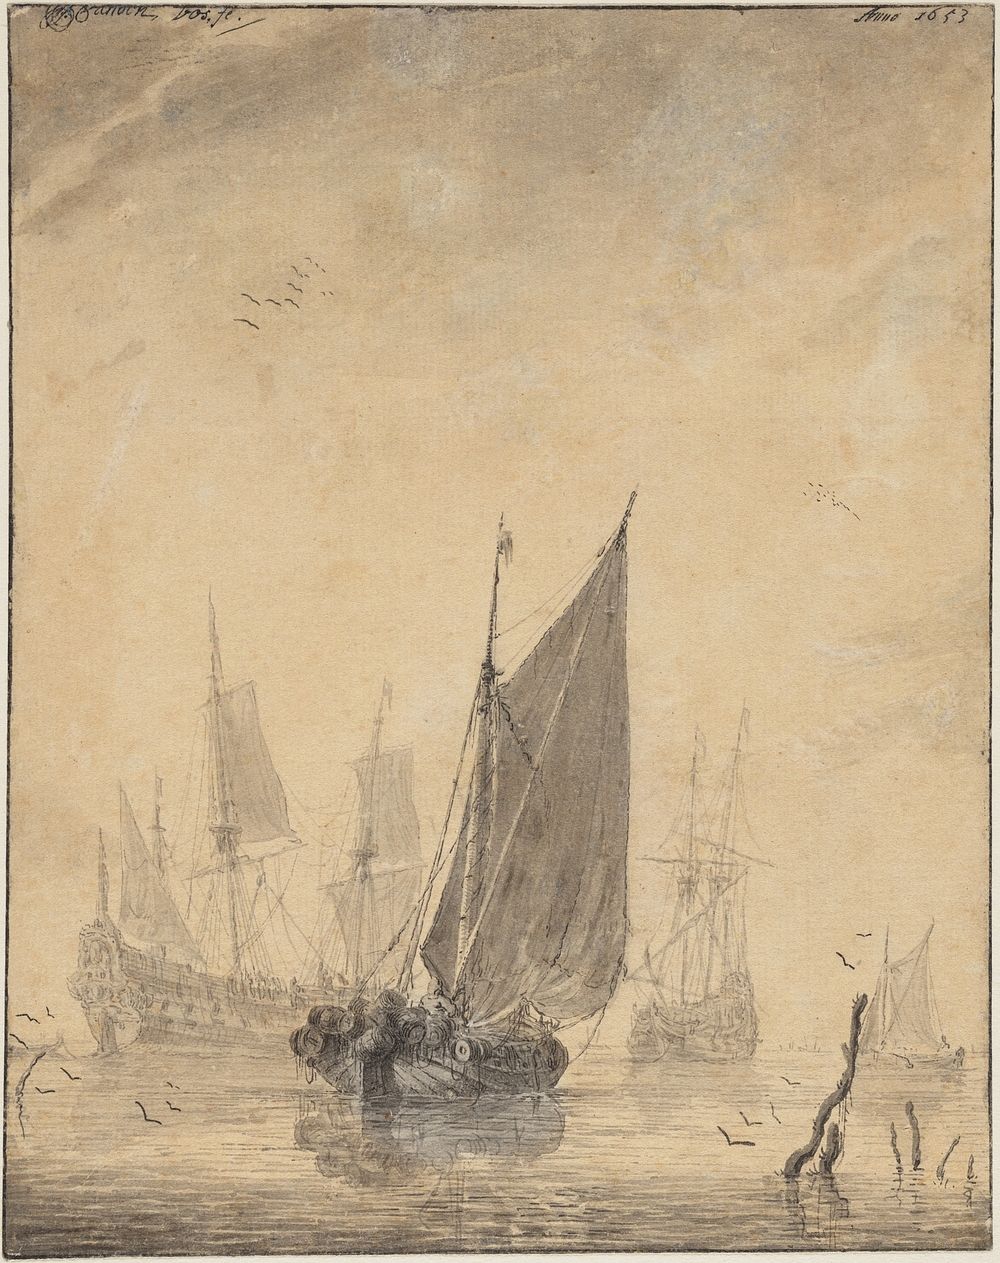 Man-of-War and Small Vessels by Caspar van den Bos